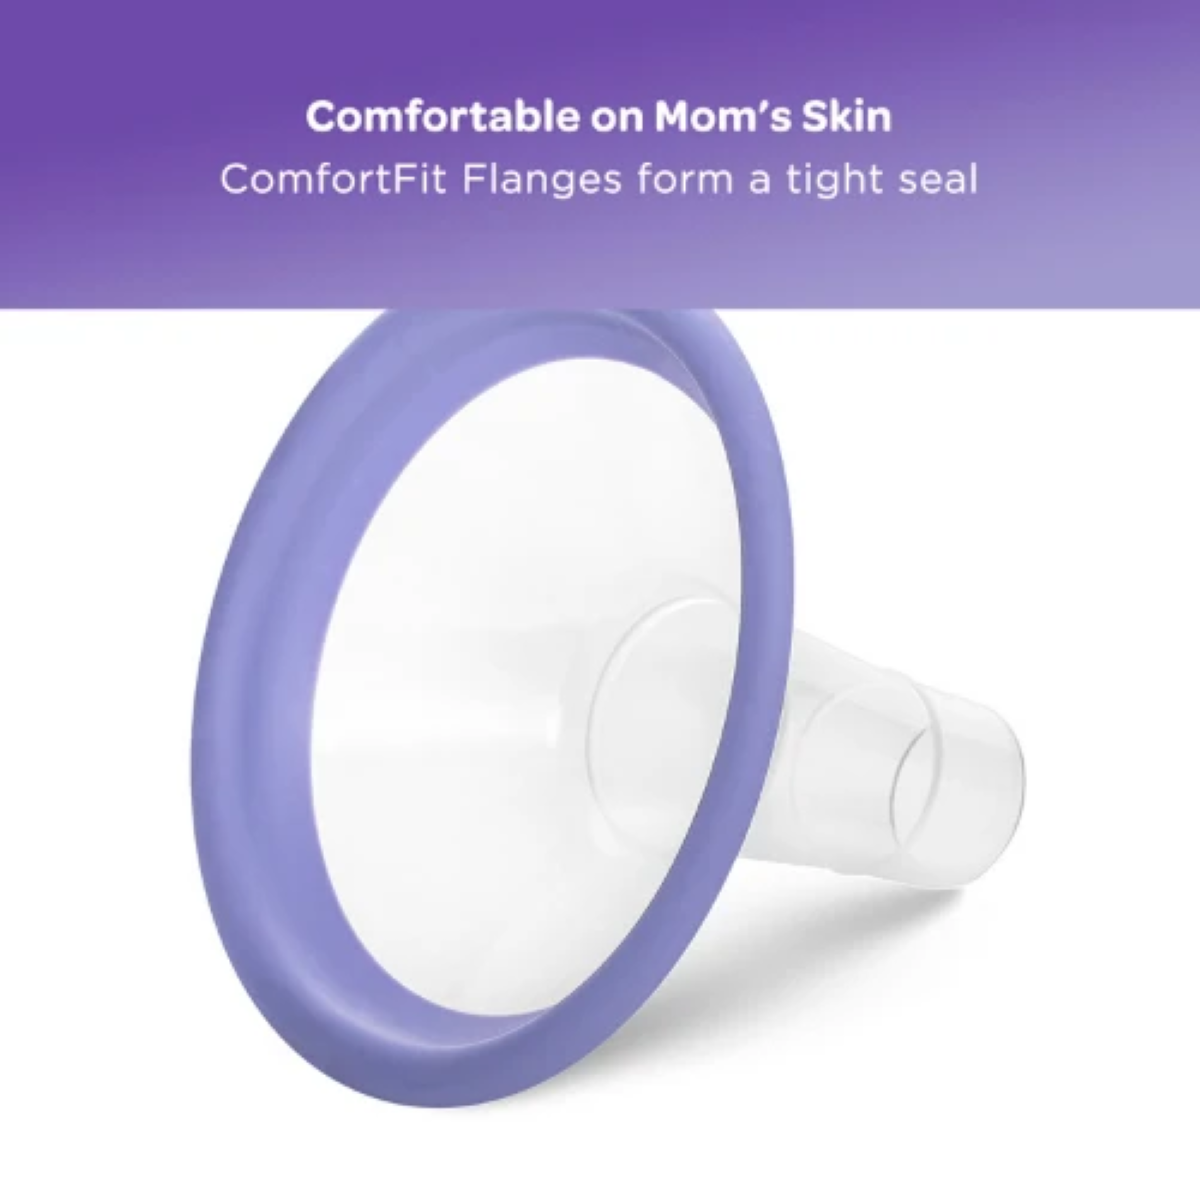 ComfortFit flanges - Comfortable, Soft and Flexible